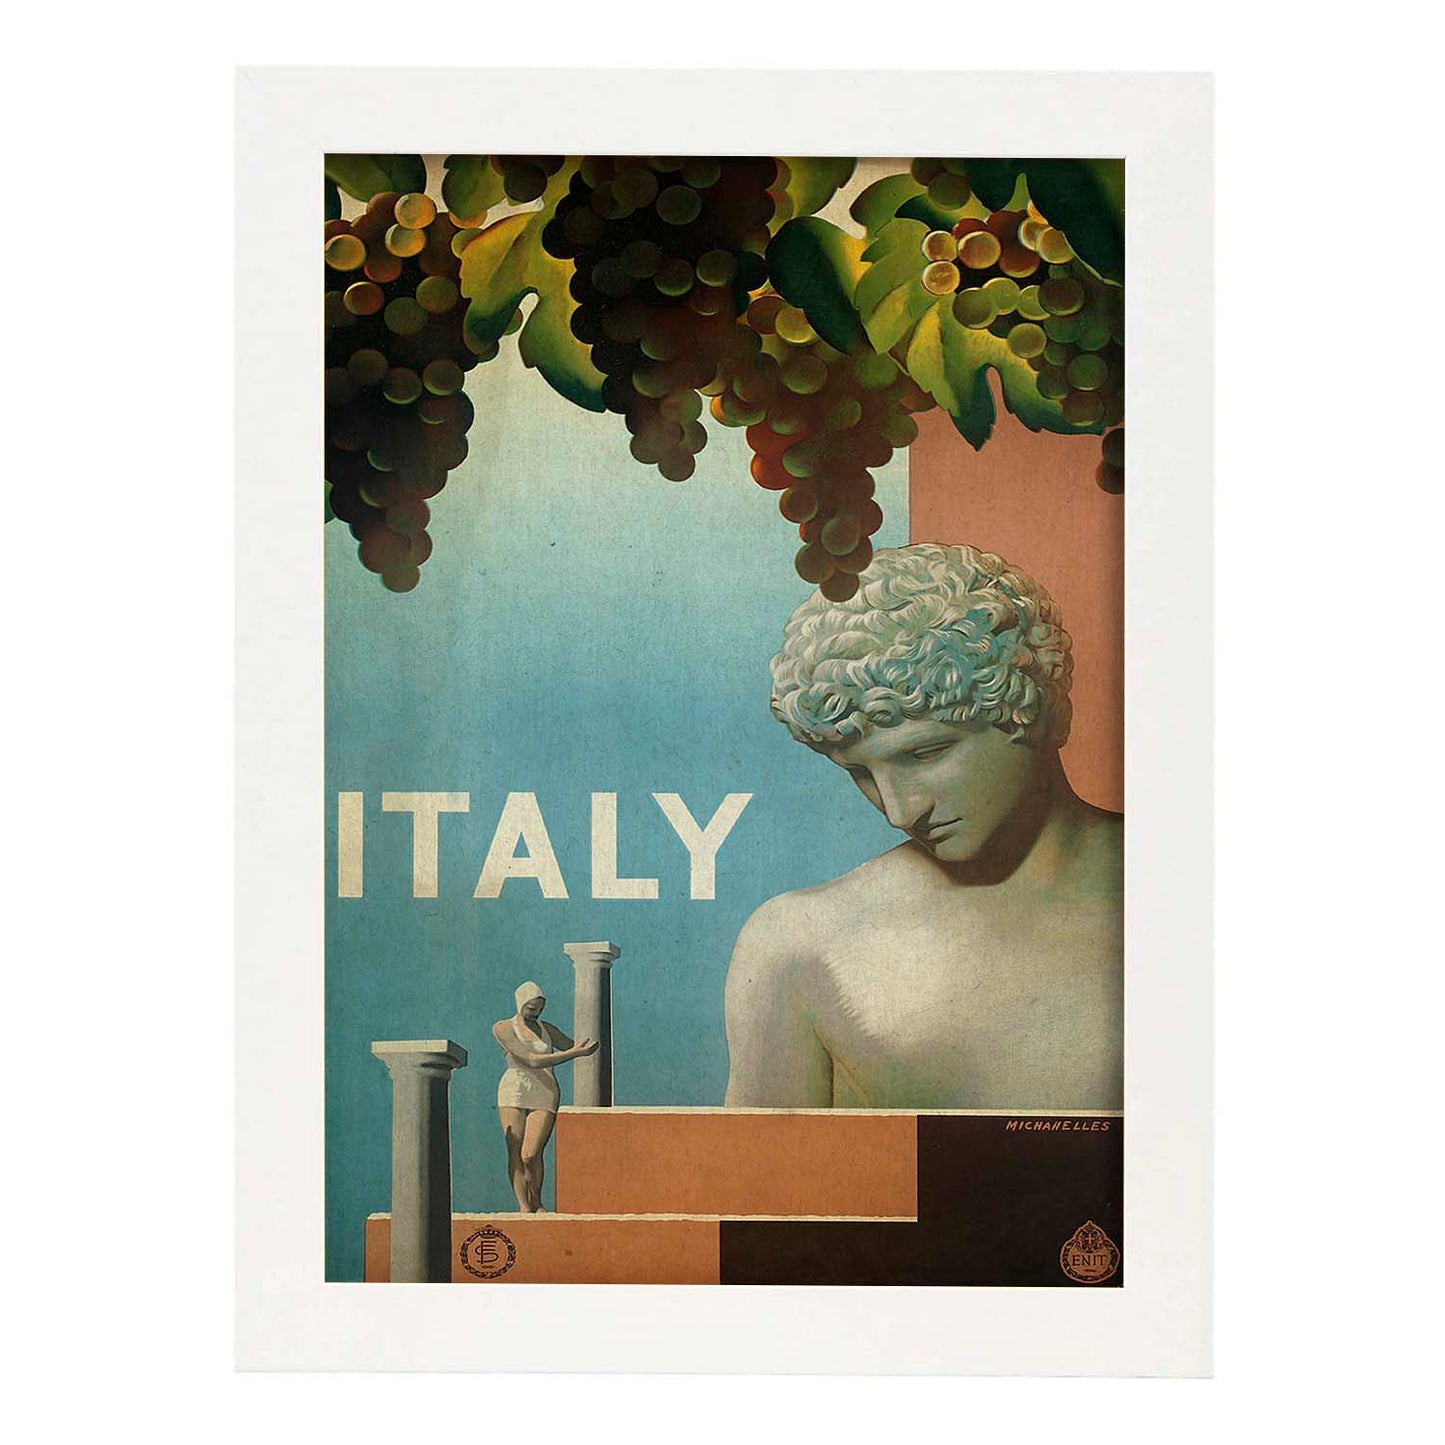 Poster vintage. Cartel vintage de Francia e Italia. Viaja a Italia.-Artwork-Nacnic-A4-Marco Blanco-Nacnic Estudio SL